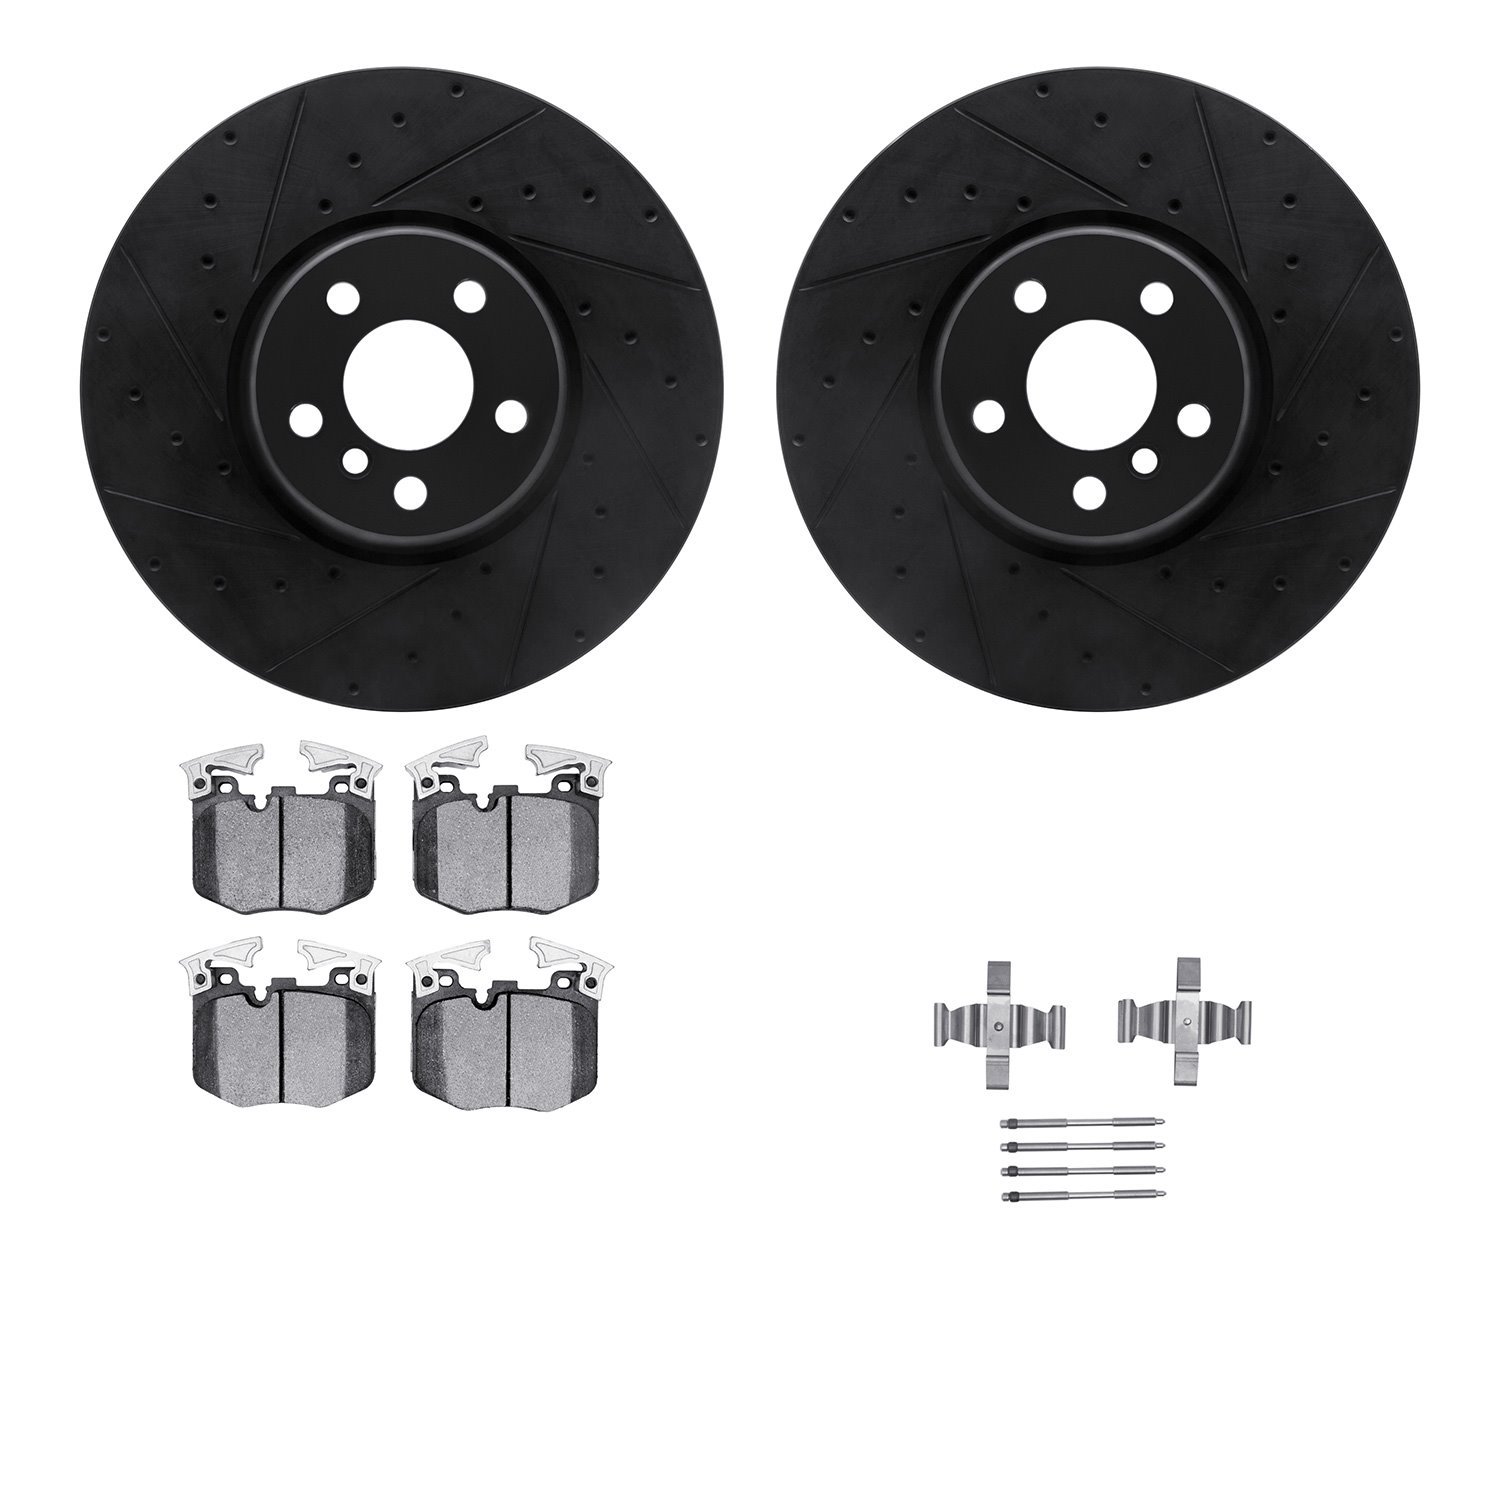 8512-31139 Drilled/Slotted Brake Rotors w/5000 Advanced Brake Pads Kit & Hardware [Black], Fits Select Multiple Makes/Models, Po